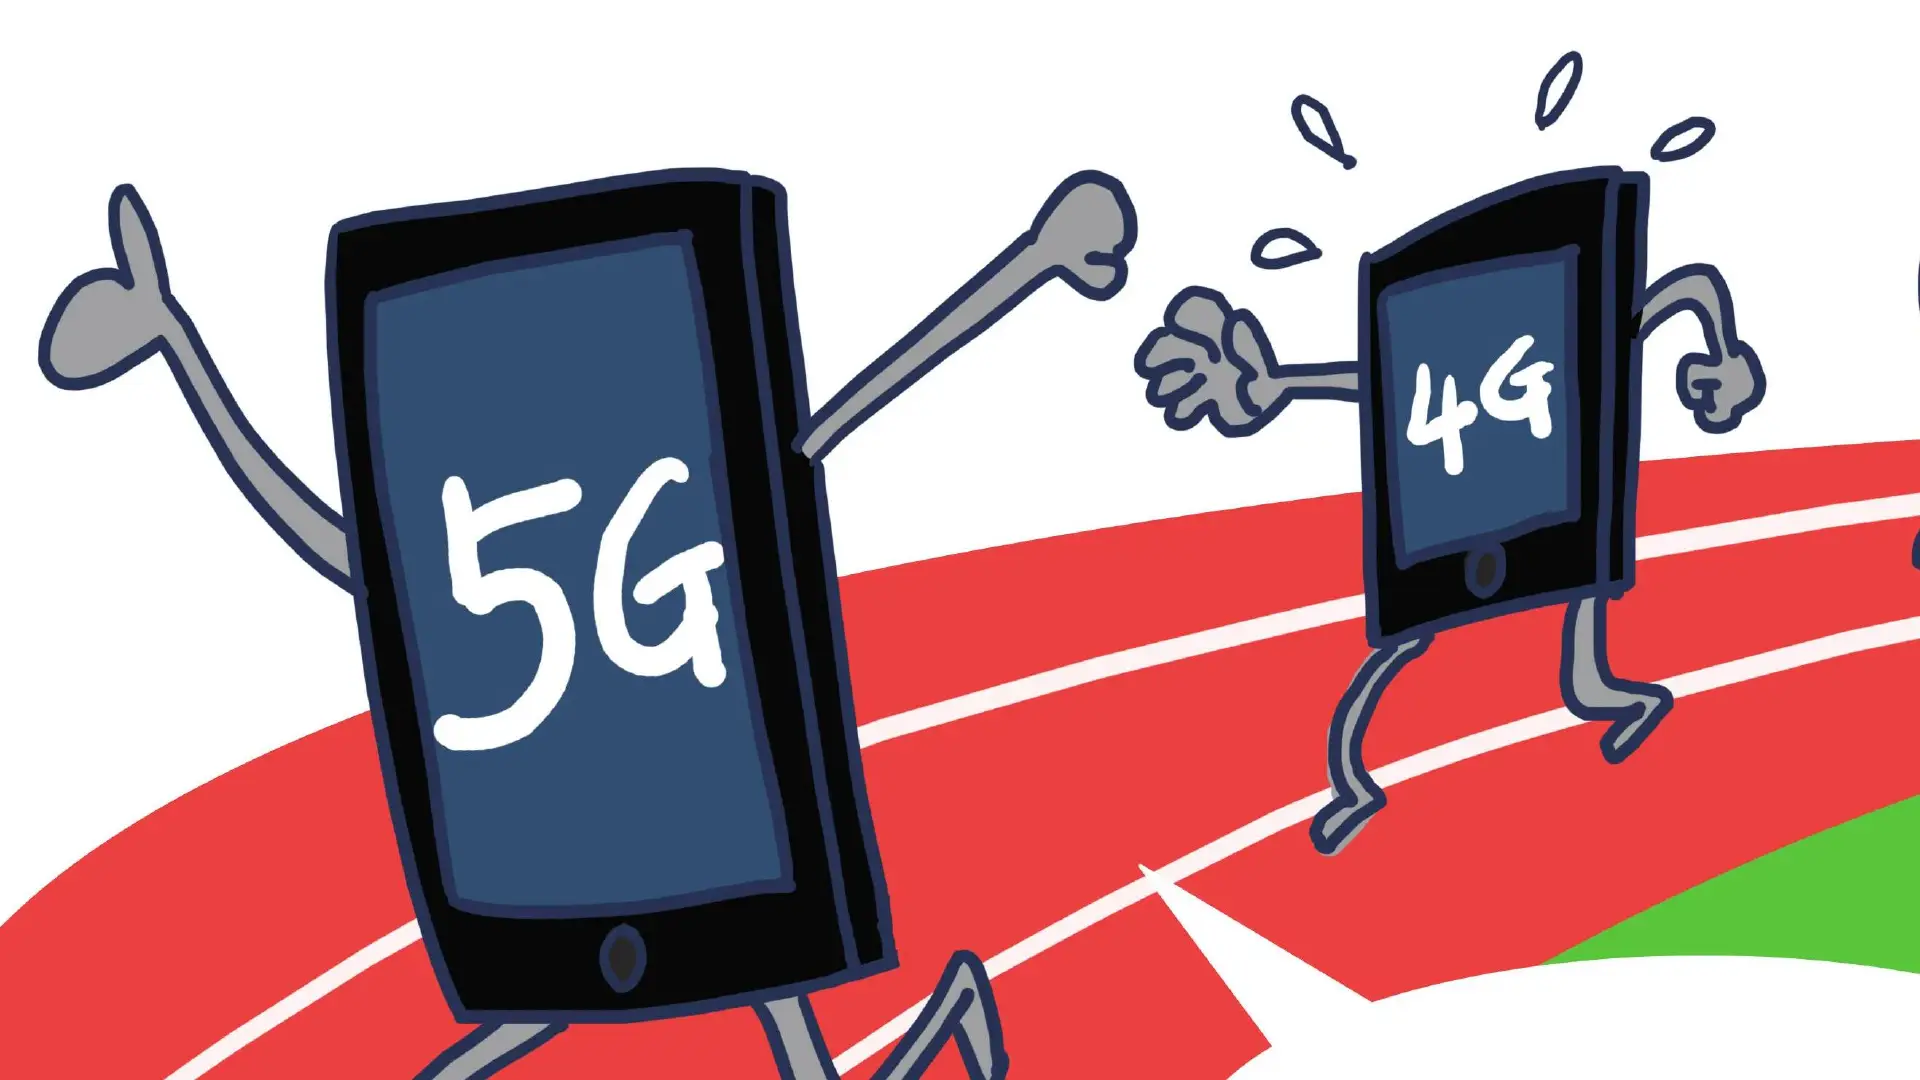 4G 技术带来便利，5G 悄然降临将彻底变革生活方式  第7张